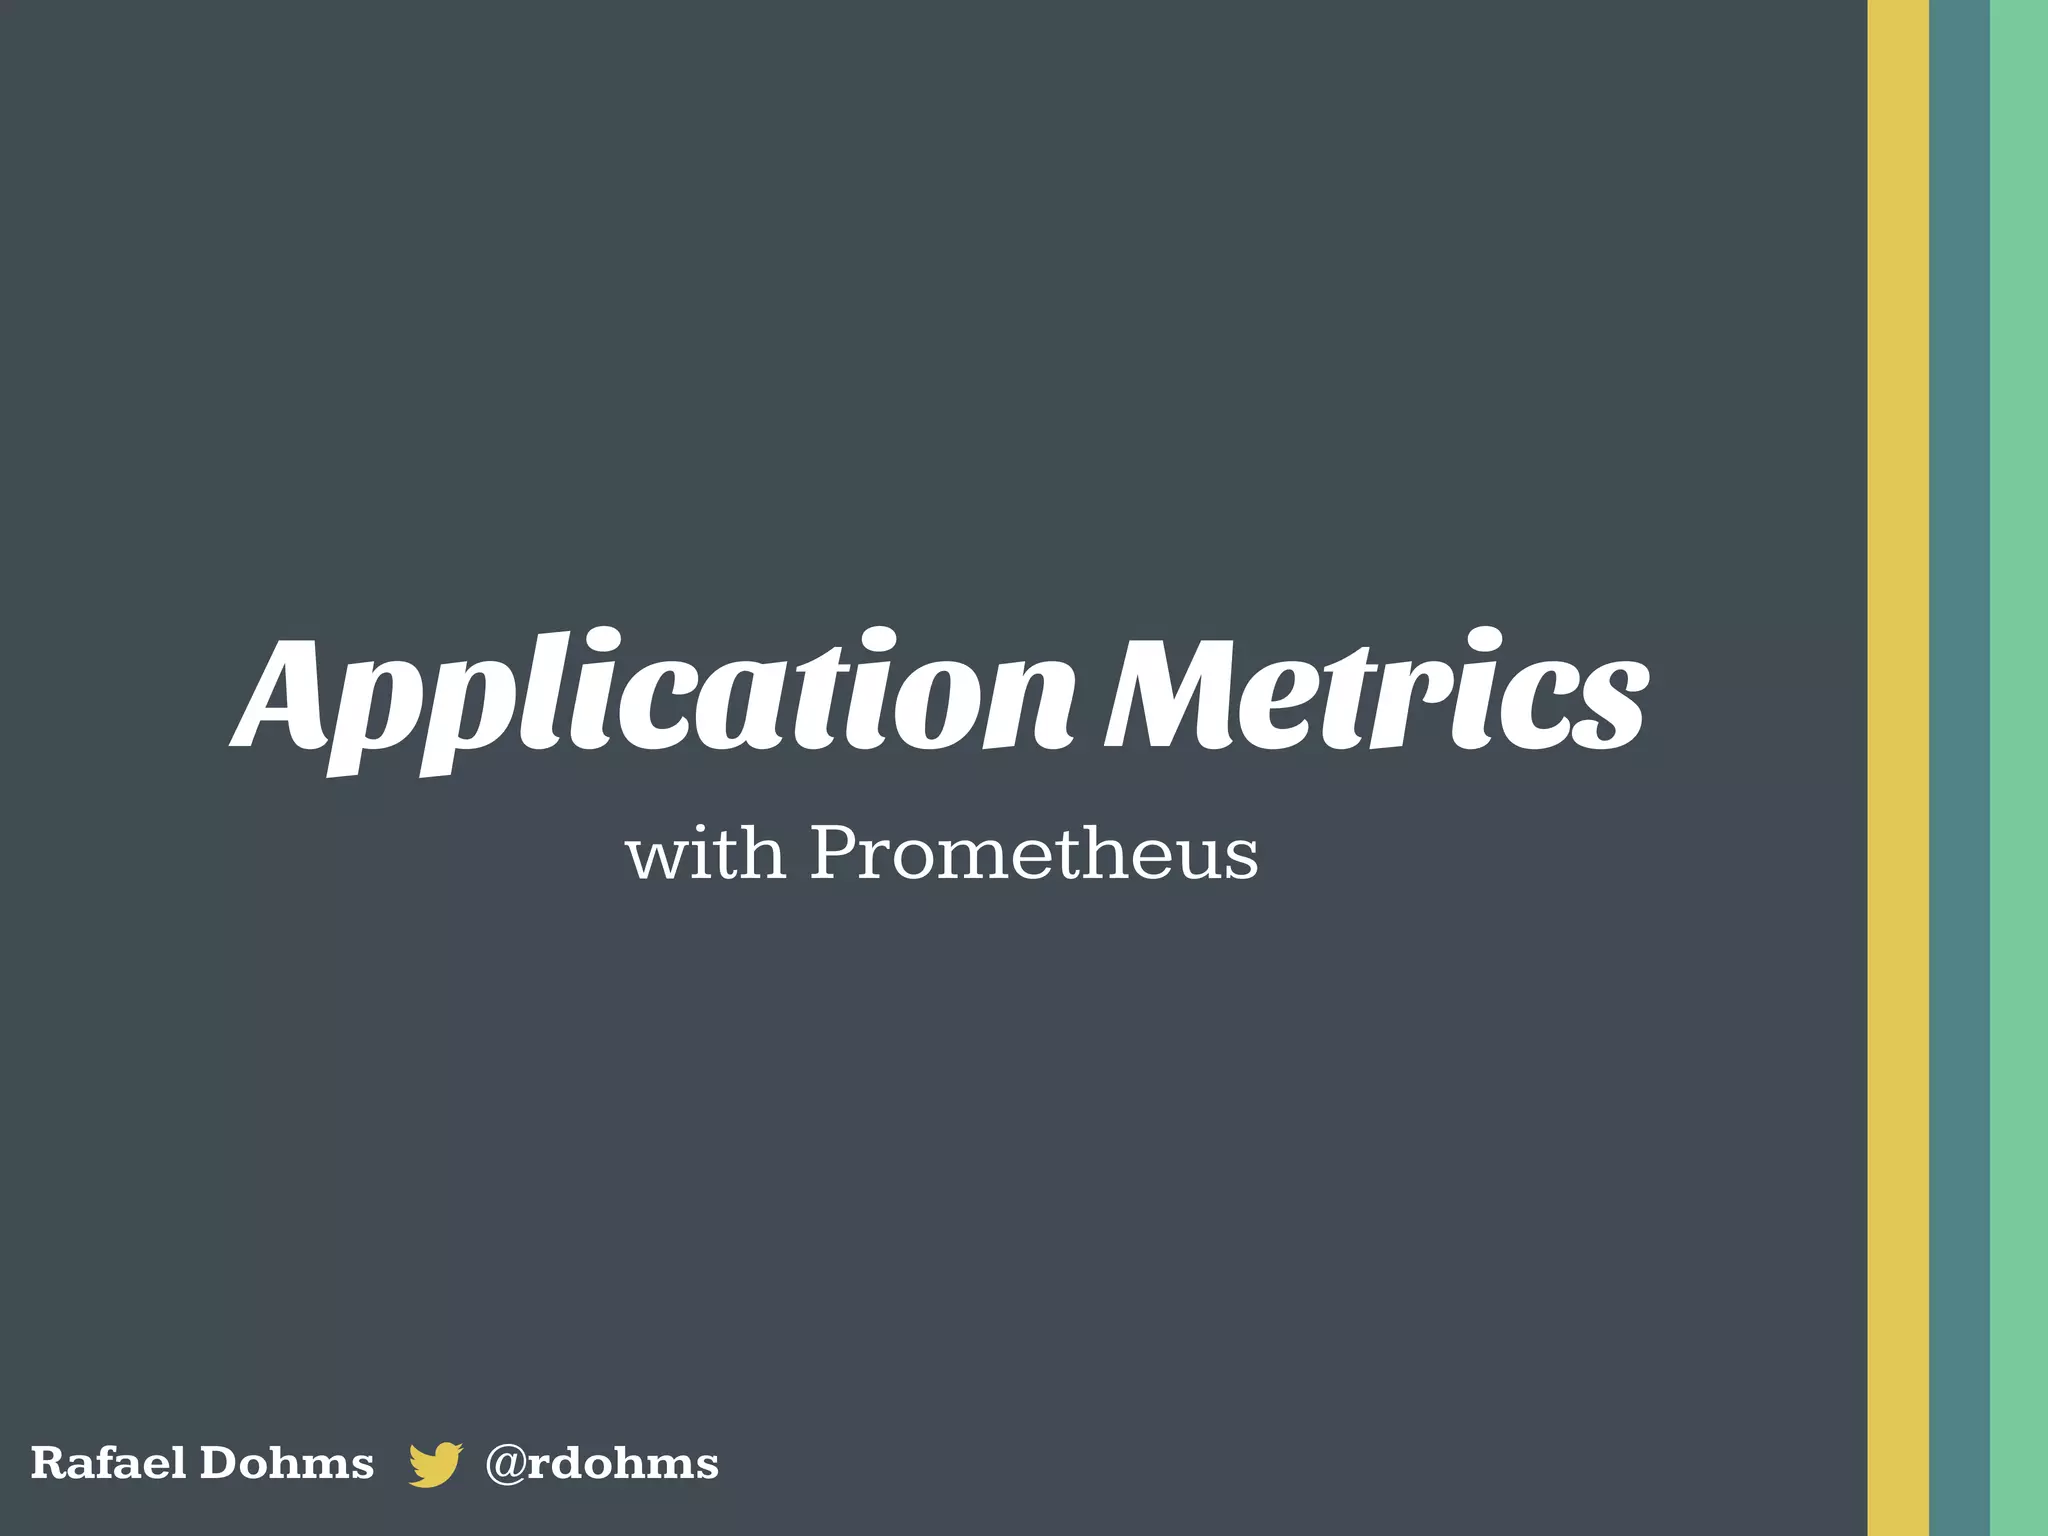 Application metrics with Prometheus